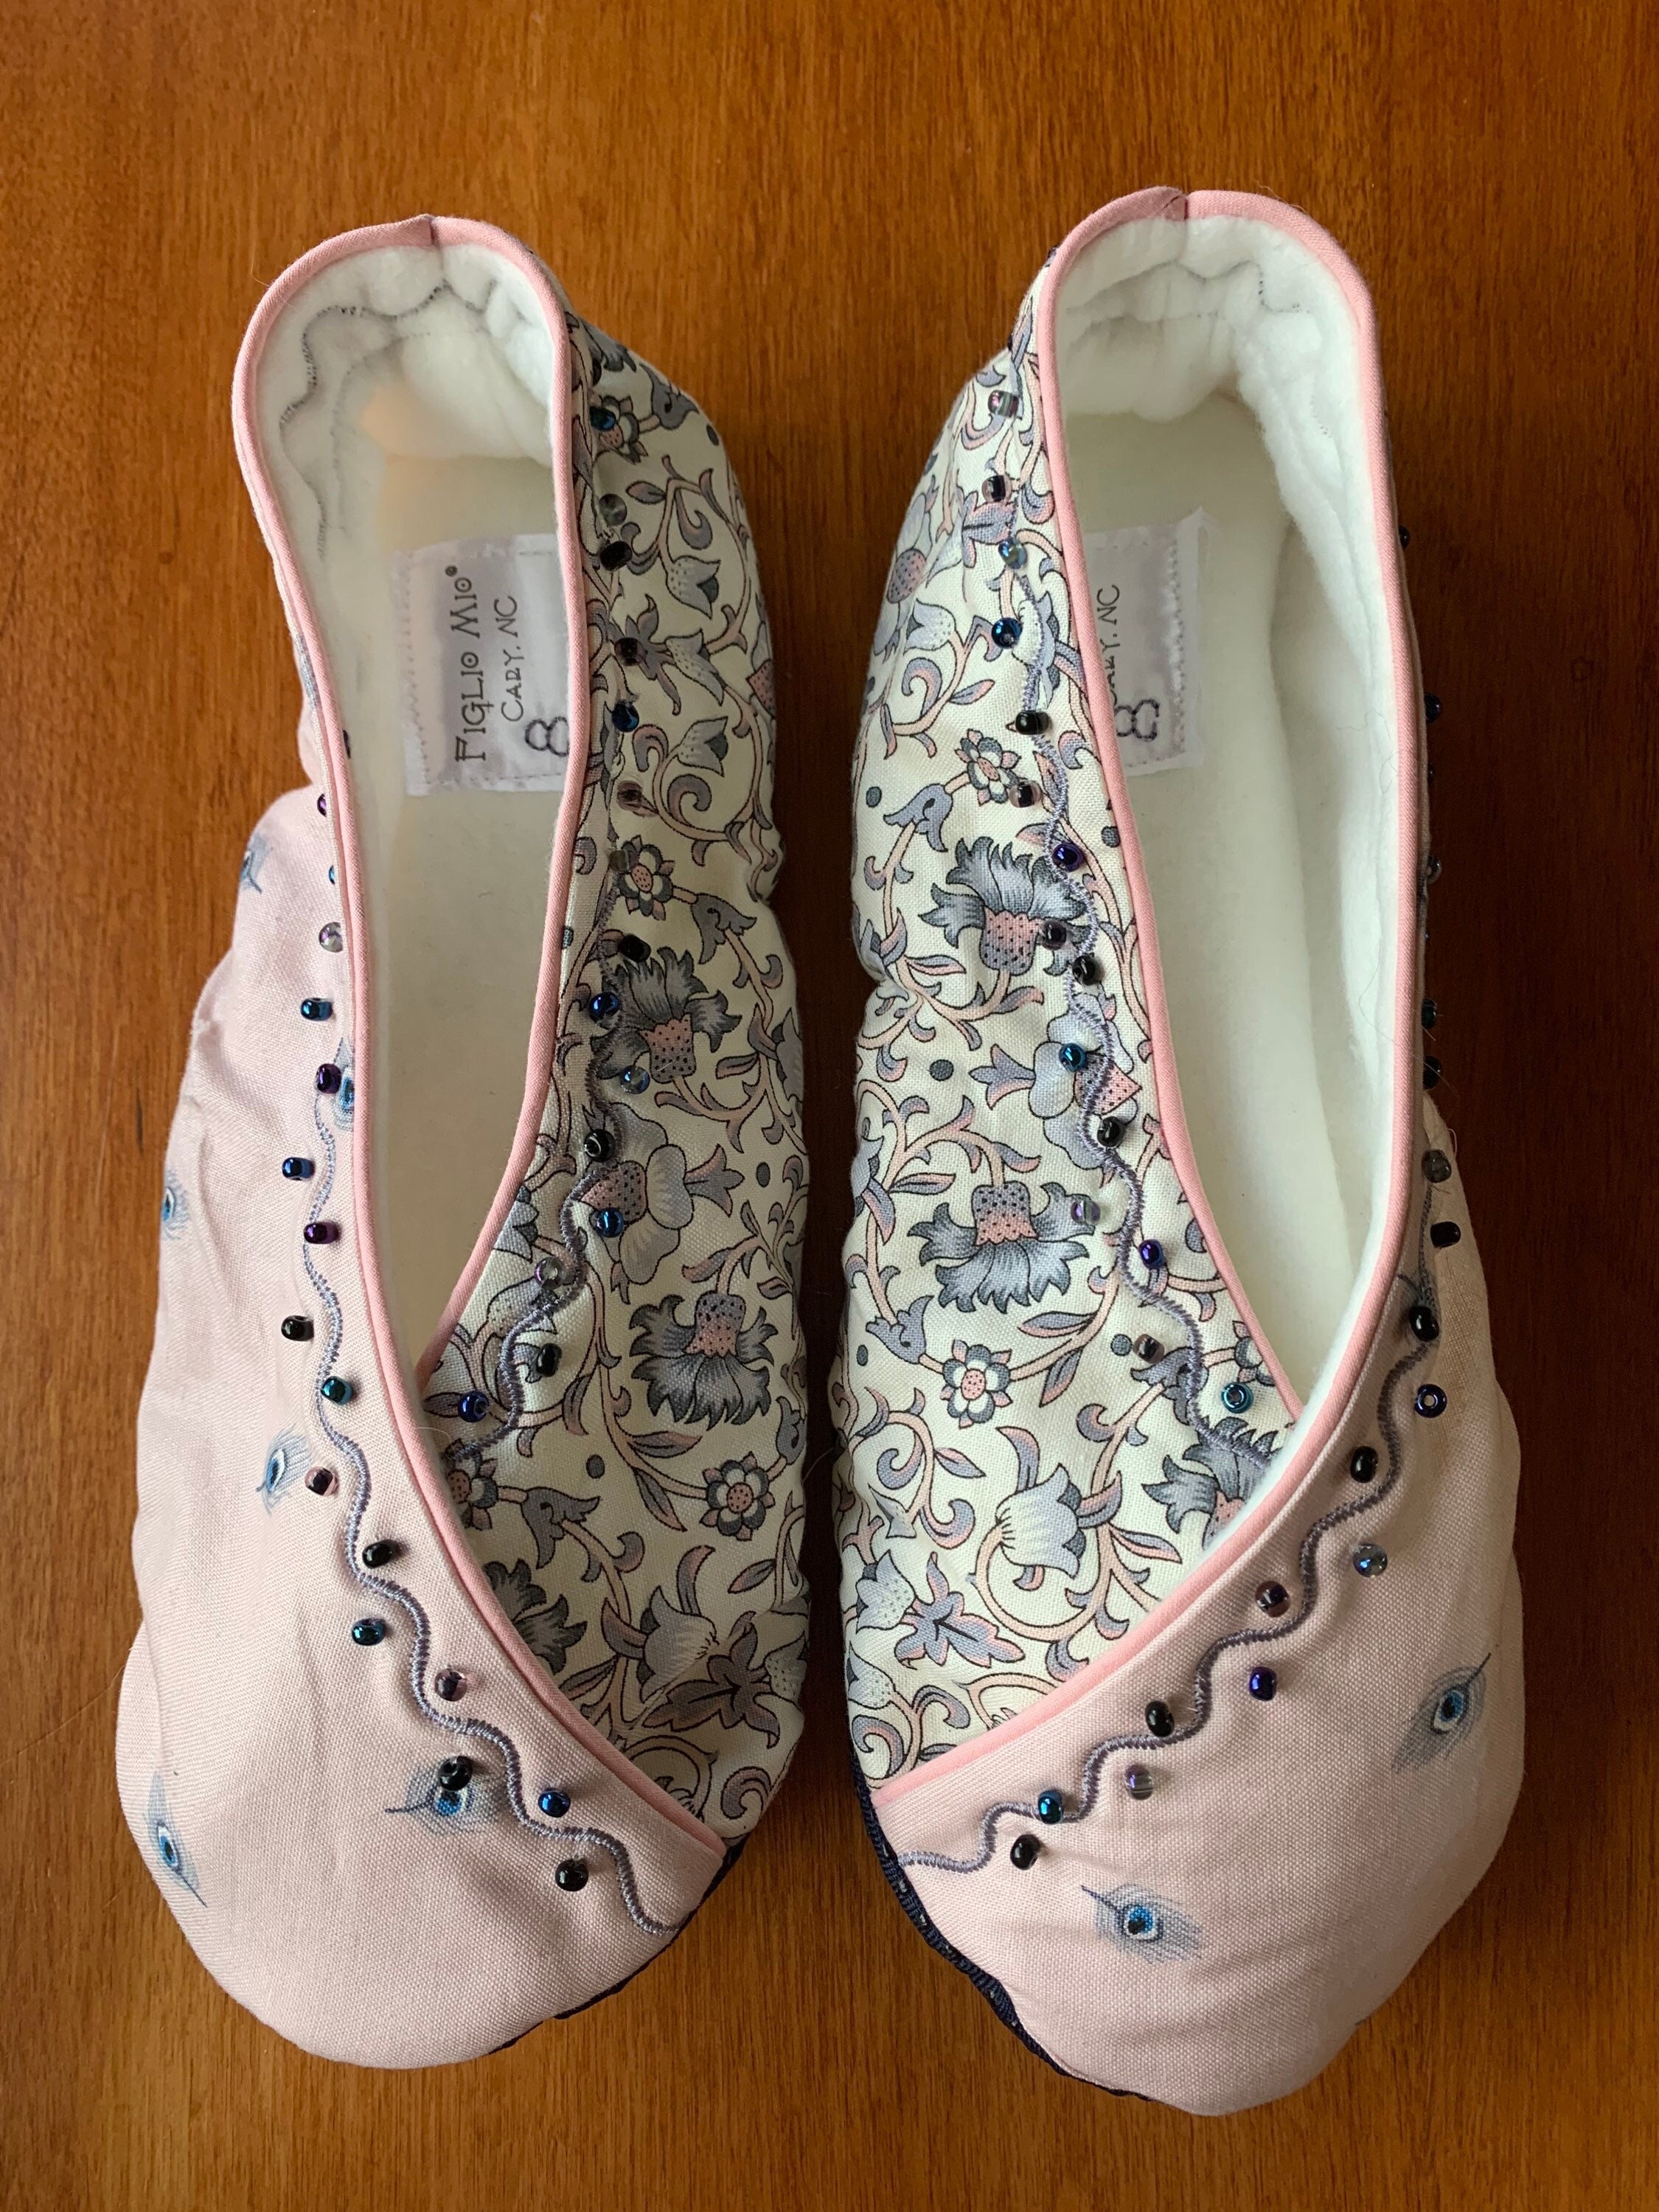 chanel shoes ballet flats 8